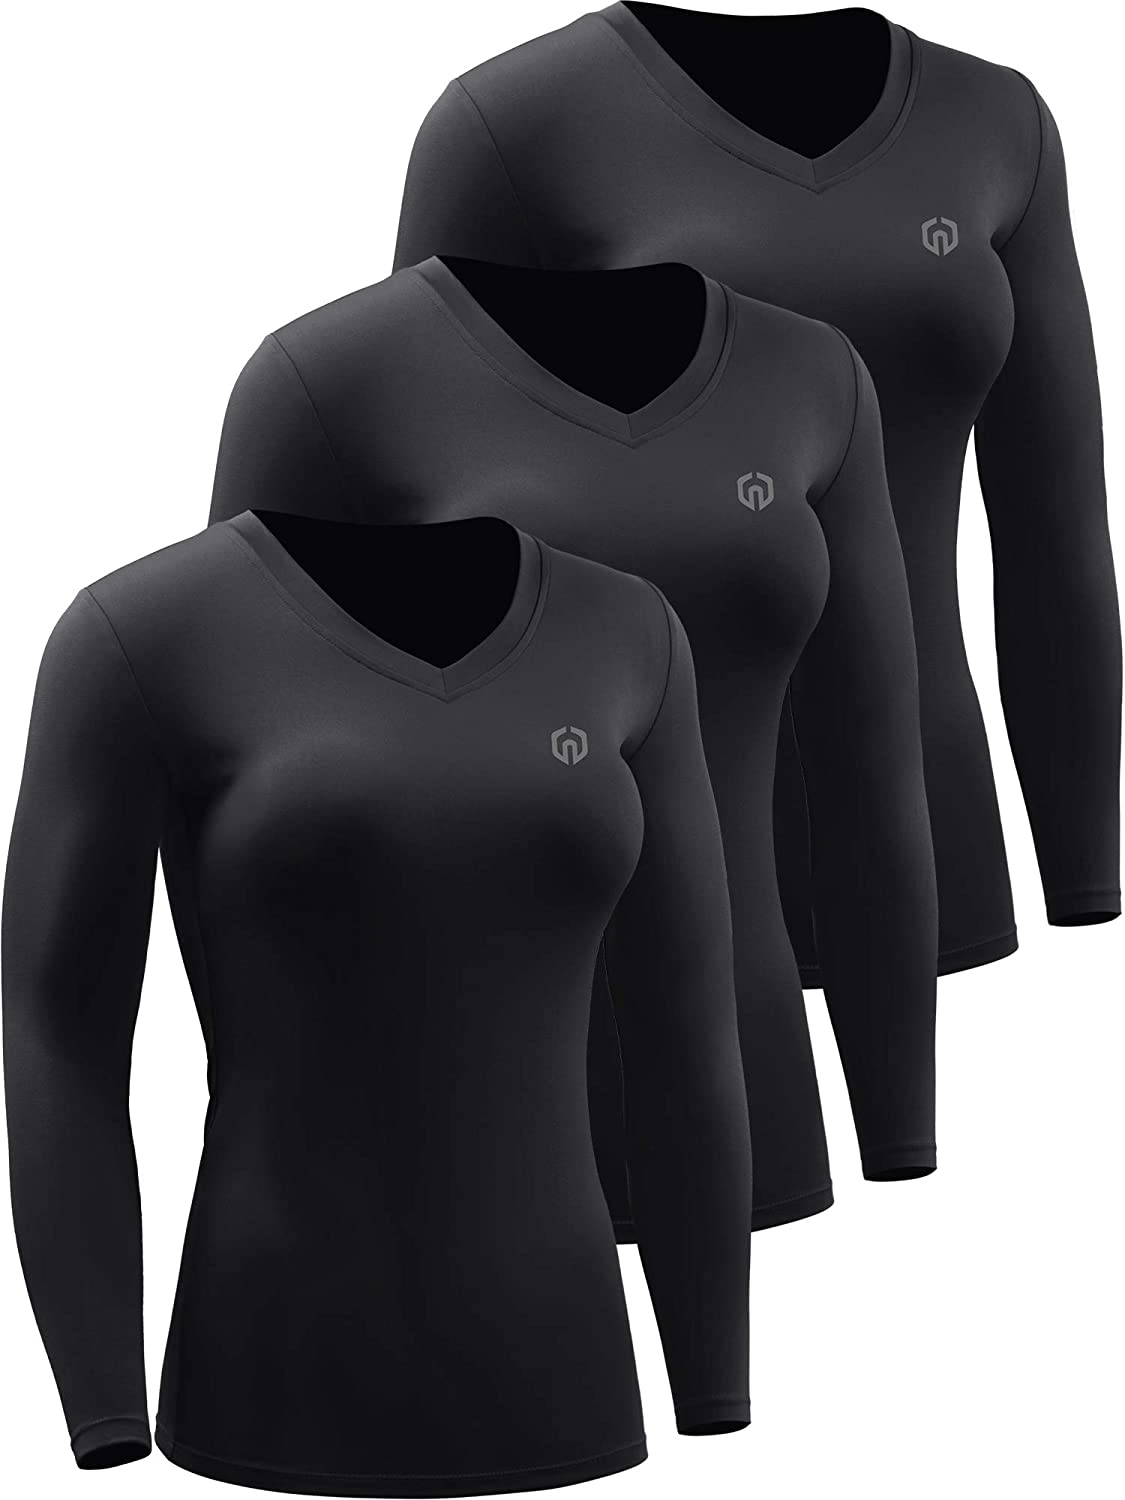 Neleus Women's 3 Pack Compression Shirts Long Sleeve Yoga Athletic Running  T Shi | eBay